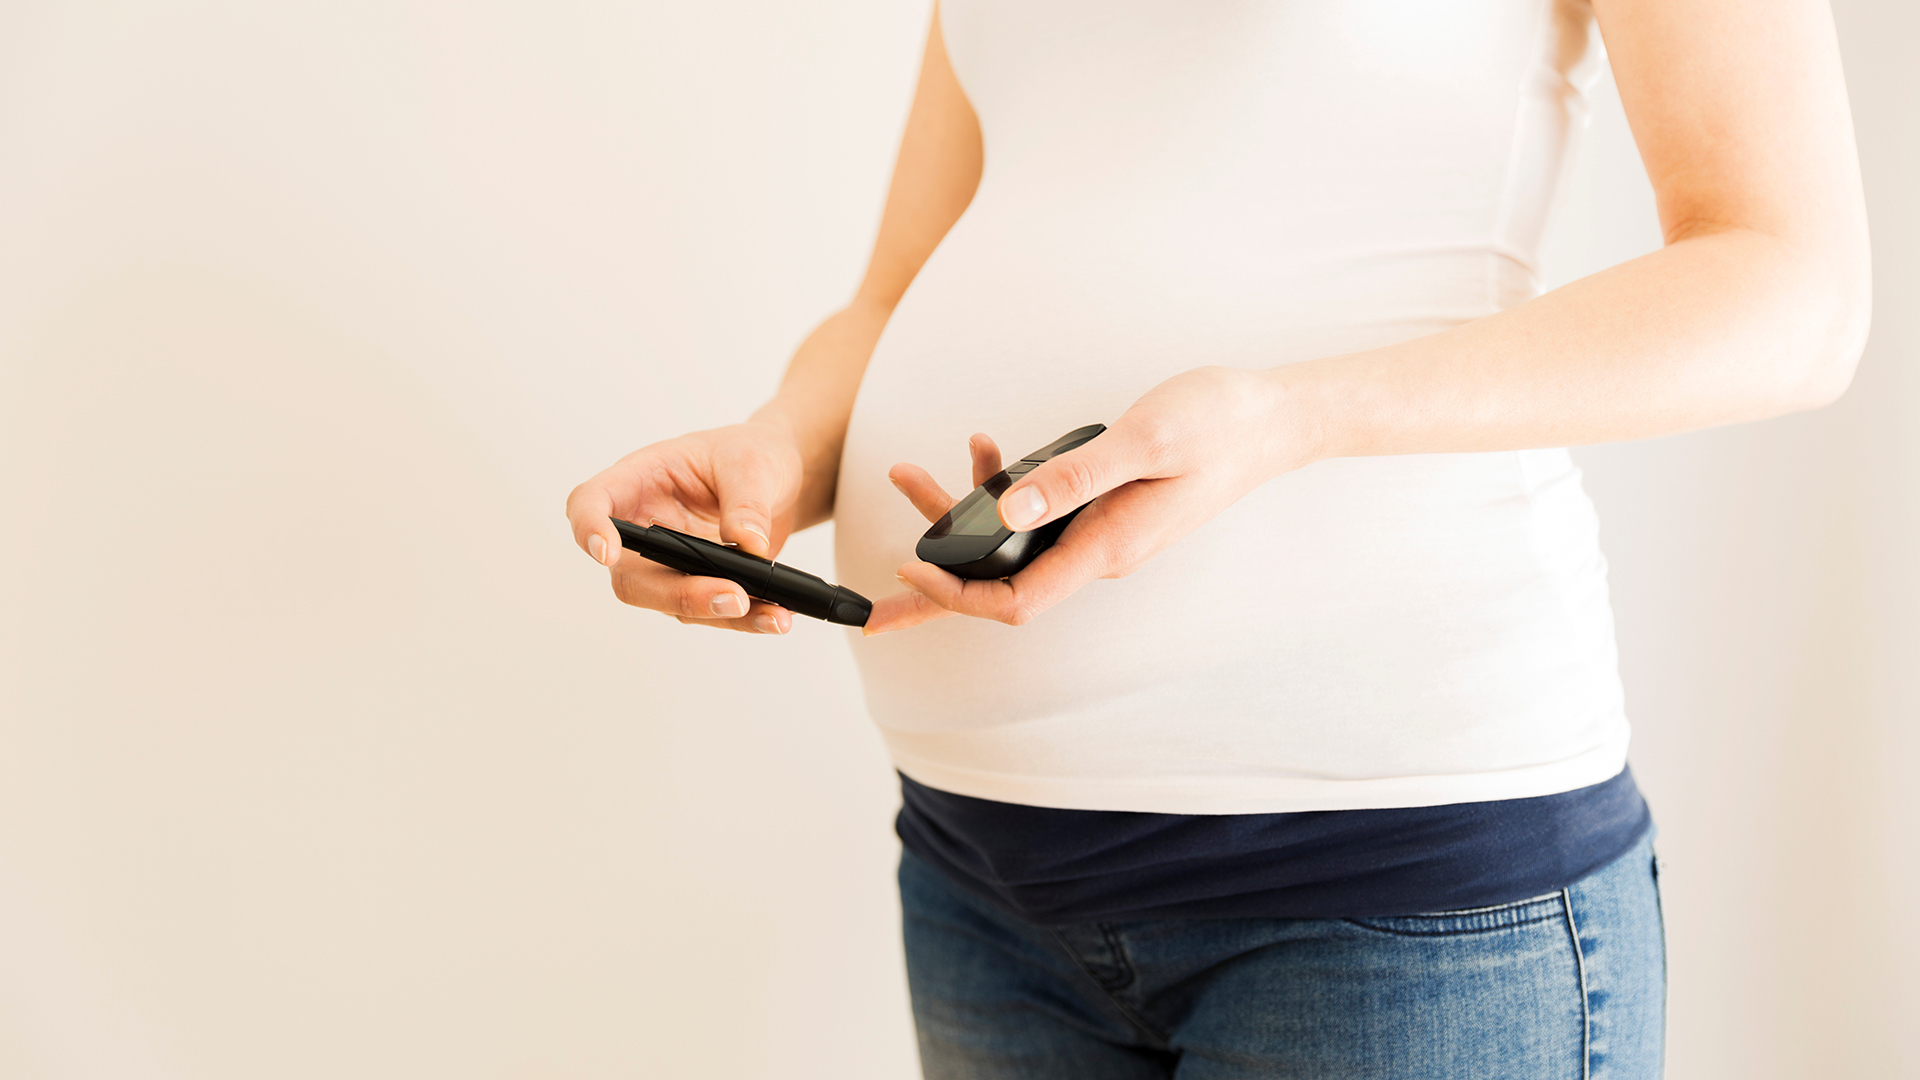 The effects of gestational diabetes mellitus on children's neurodevelopment